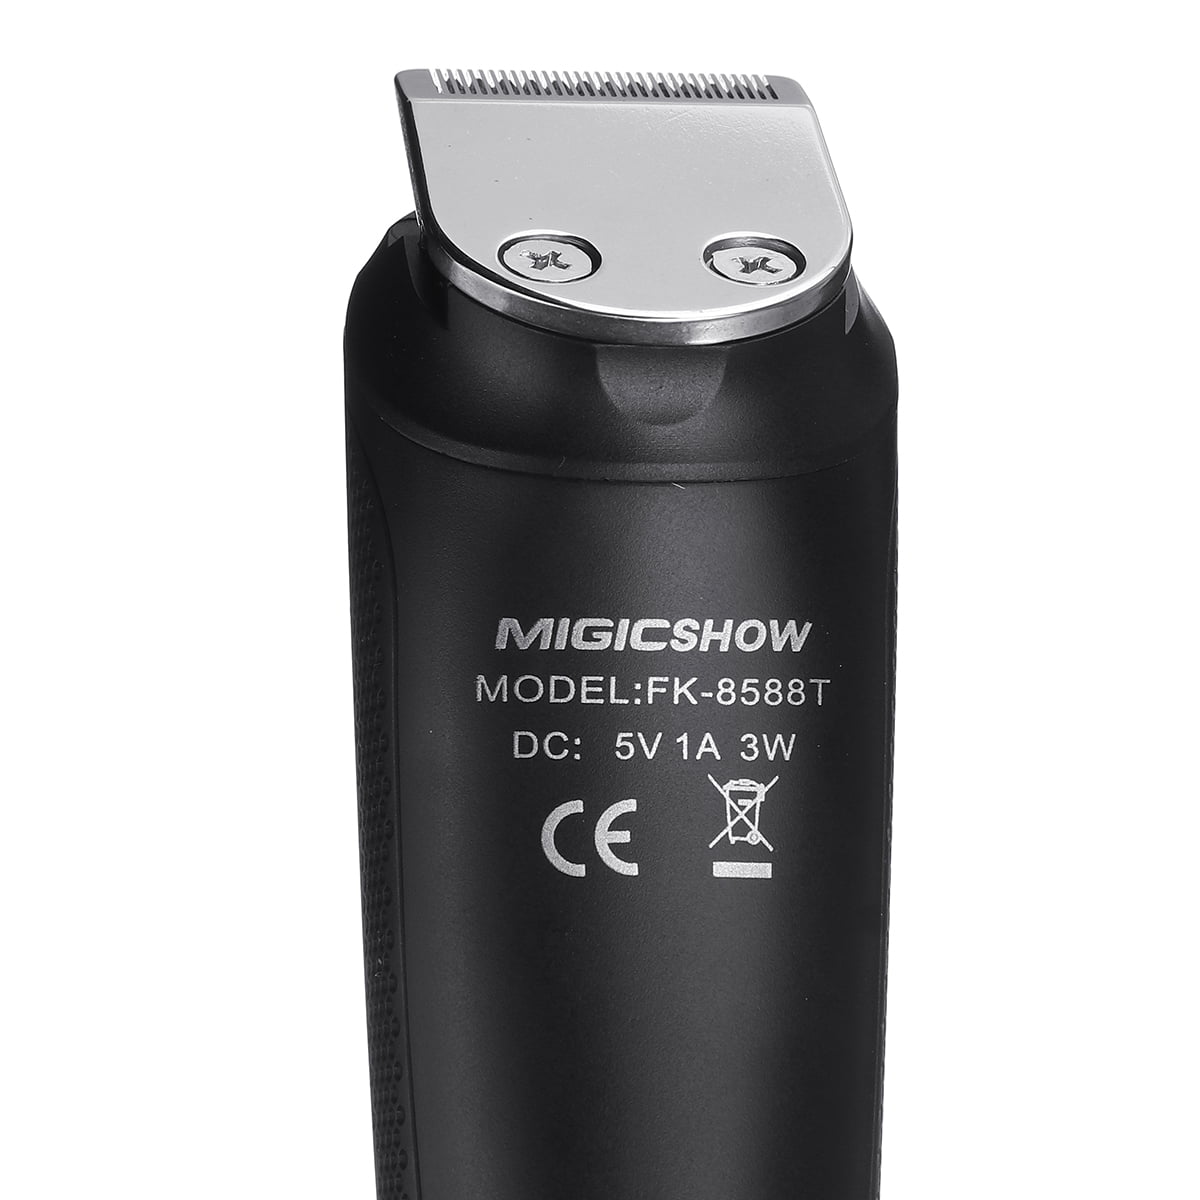 migicshow cordless hair trimmer